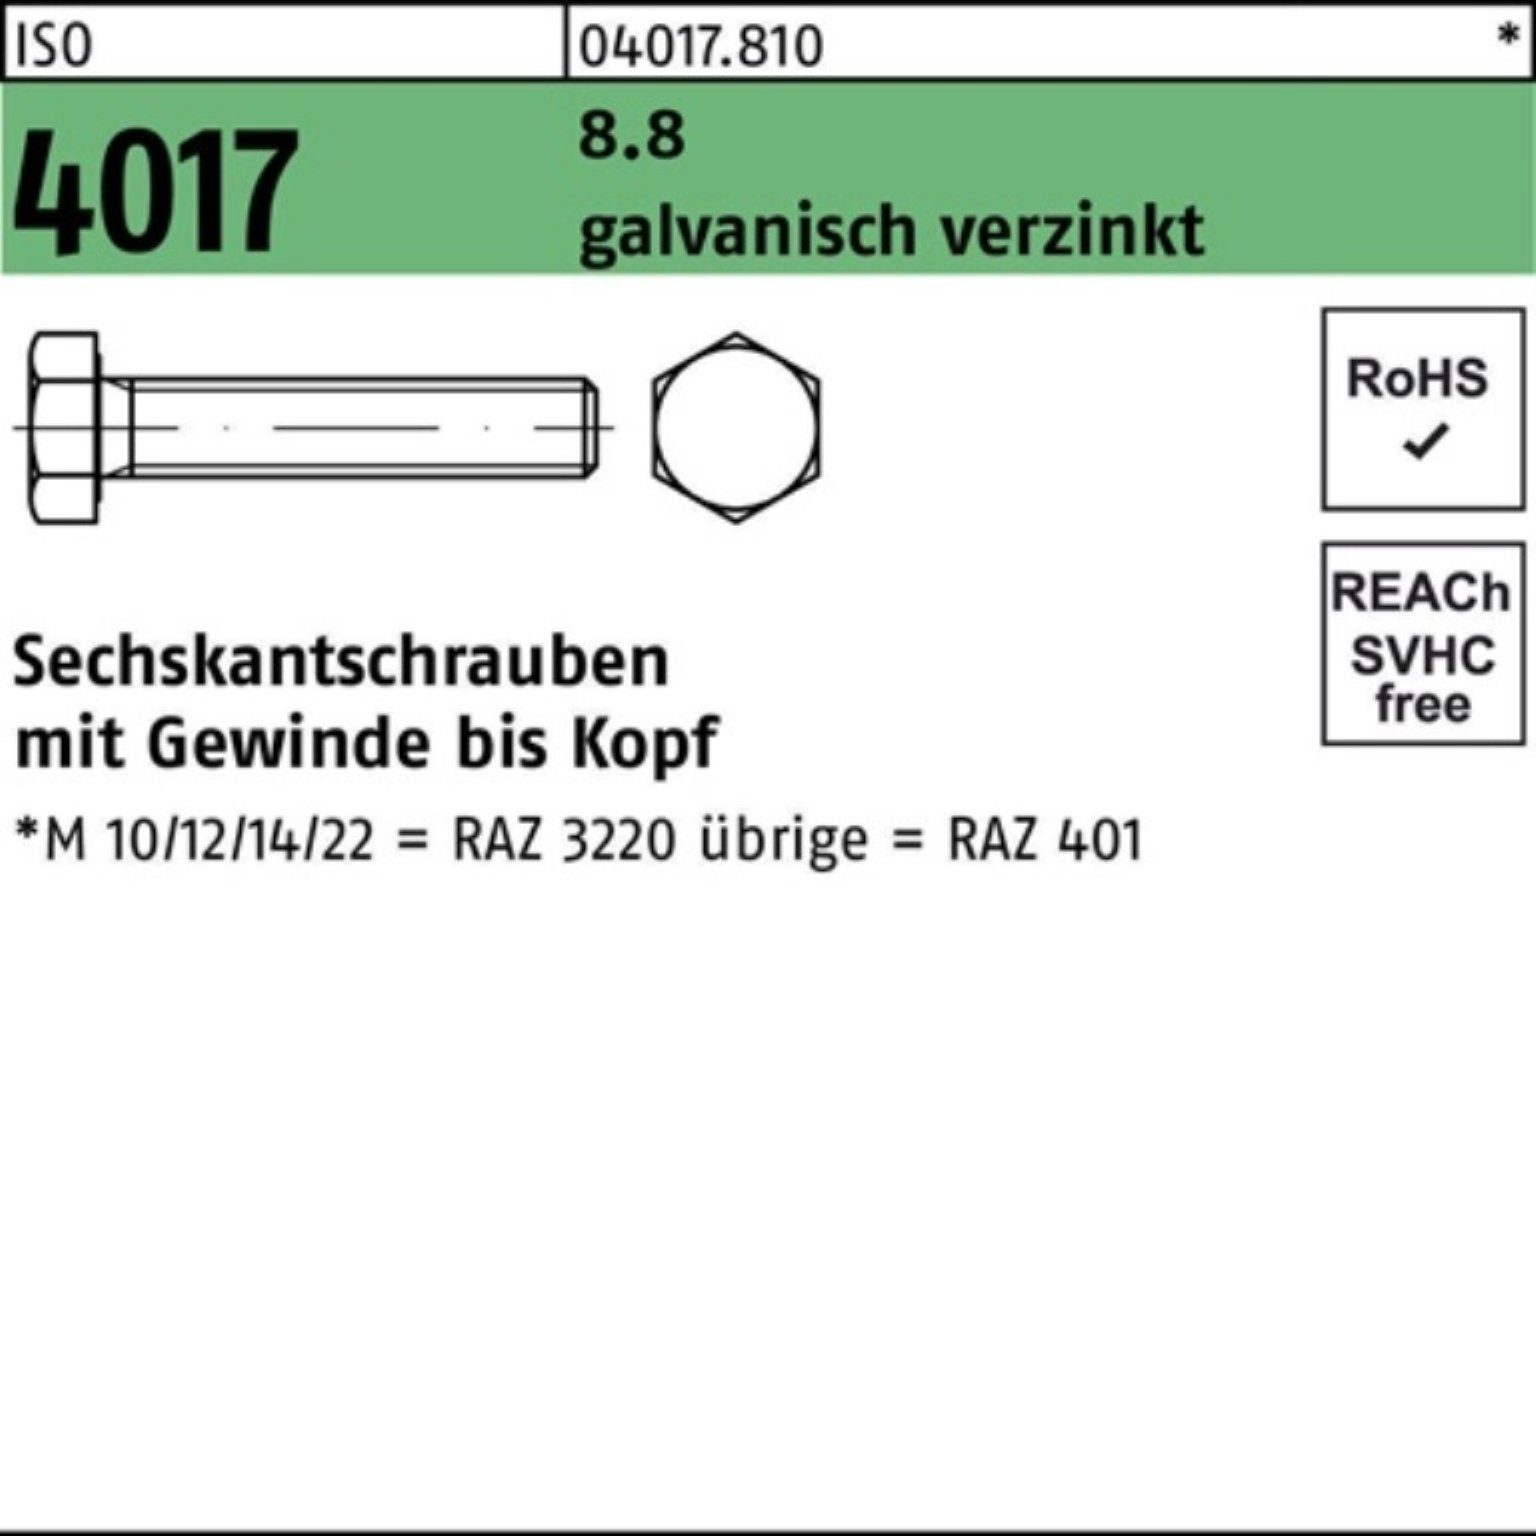 Bufab Sechskantschraube 100er 4017 Sechskantschraube galv.verz. 150 Pack VG 8.8 1 M27x St ISO